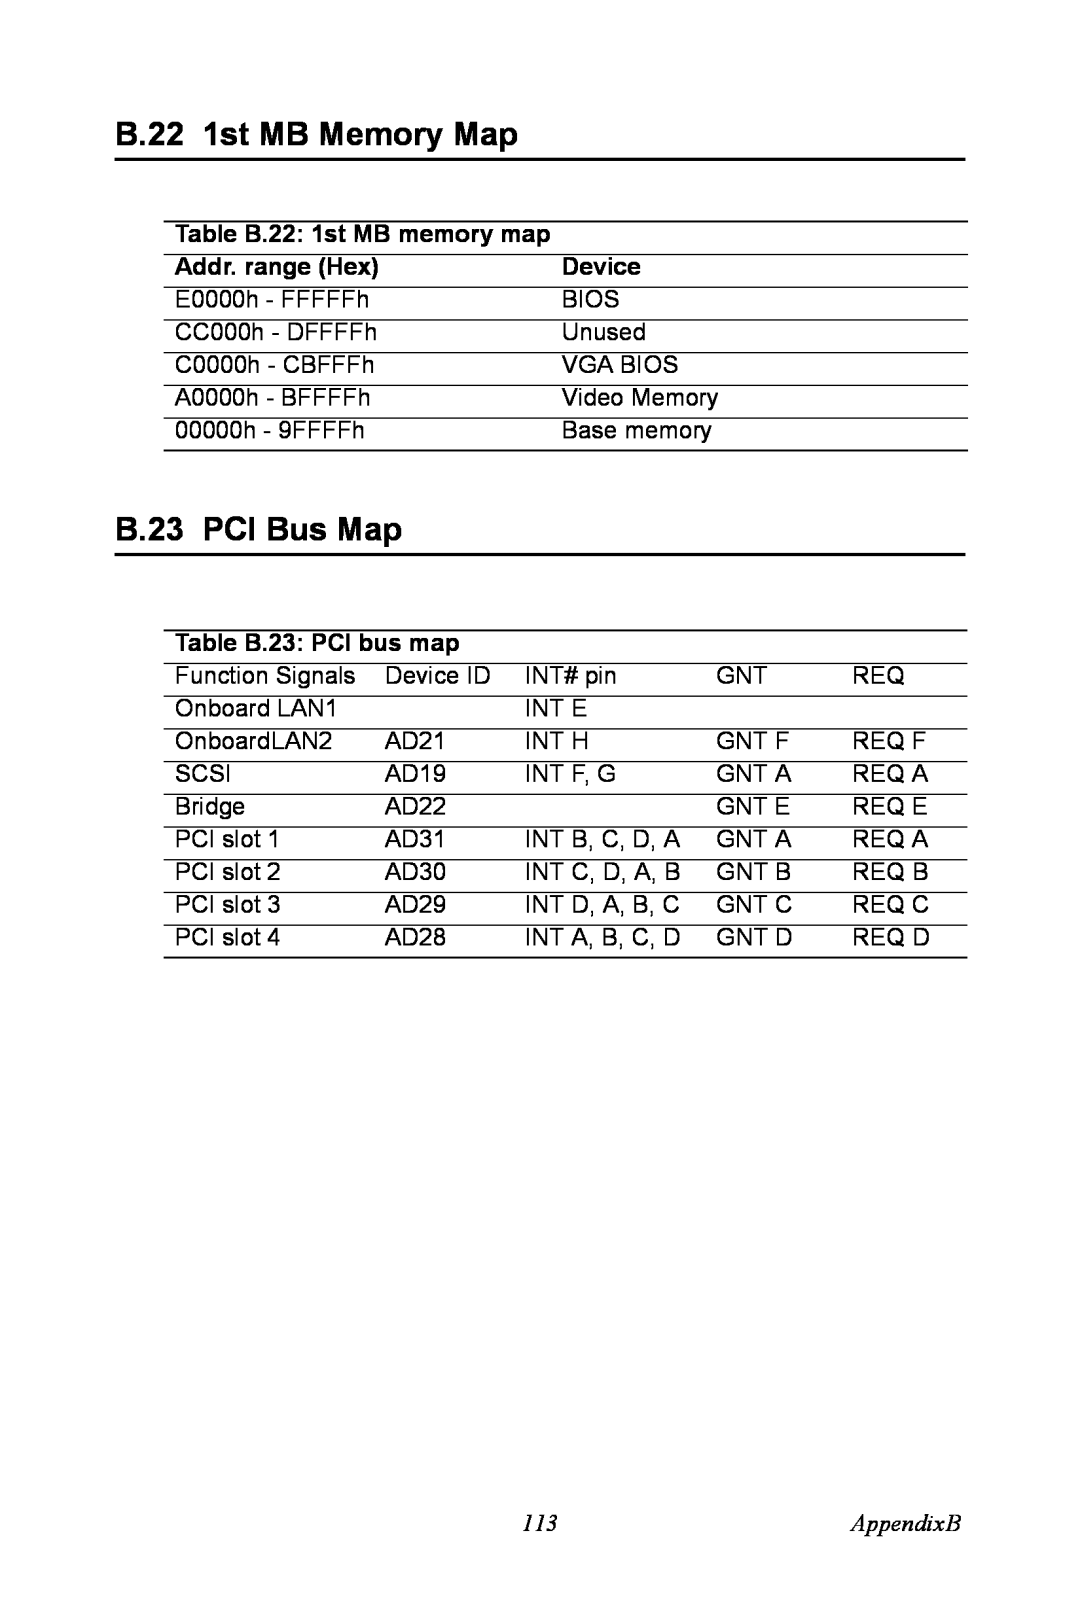 Advantech PCA-6187 B.22 1st MB Memory Map, B.23 PCI Bus Map, Table B.22 1st MB memory map, Addr. range Hex, Device 